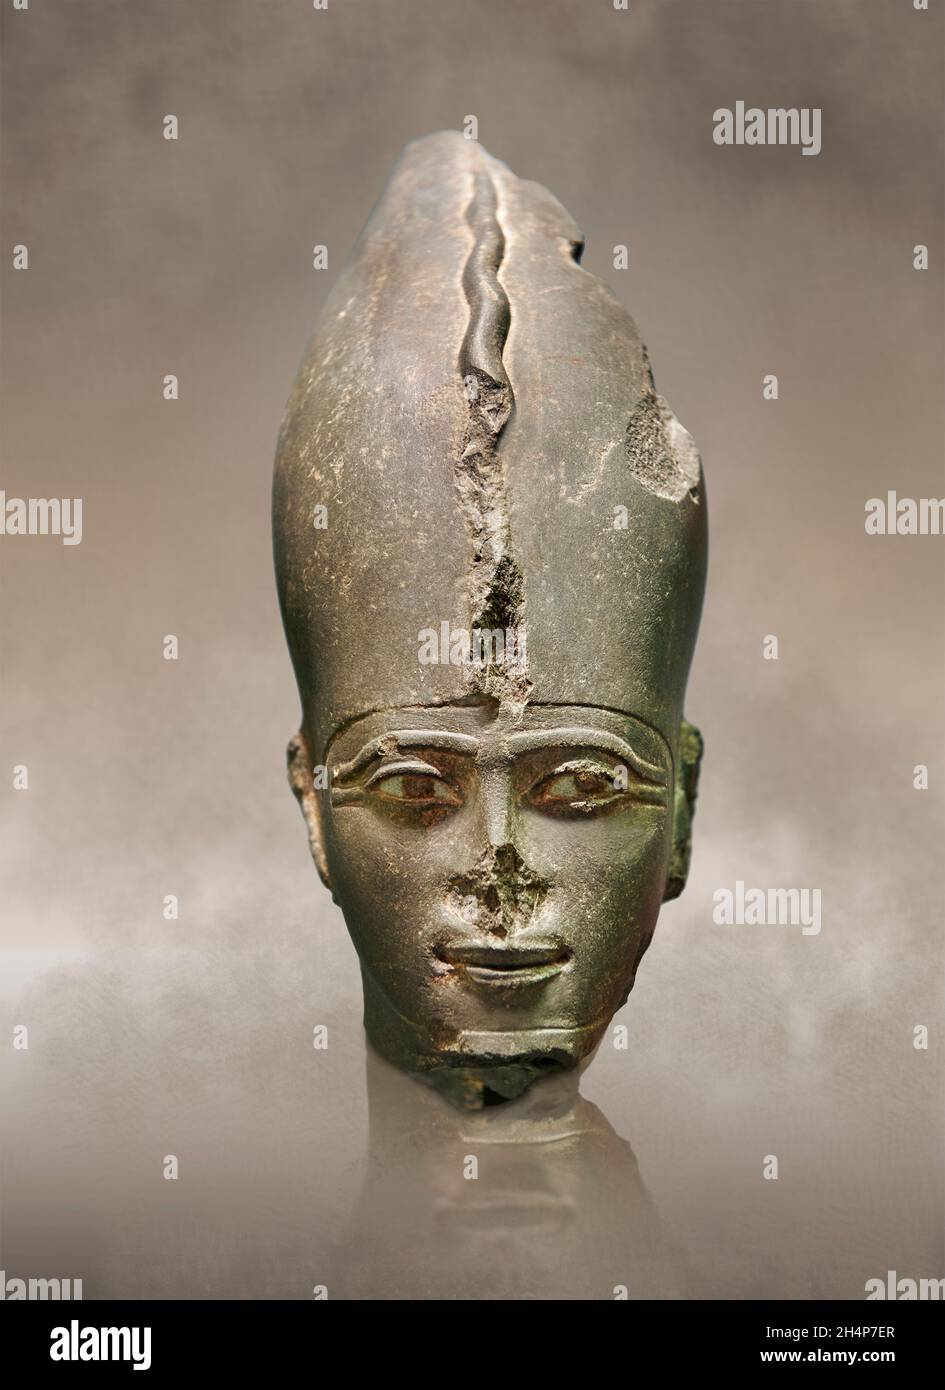 Alte ägyptische Statue Skulptur Kopf von Psamtik III, 664-596 v. Chr., 26. Dynastie, Grauwacke. Louvre Museum Inv. E10706. Psamtik III trägt das Weiß Stockfoto